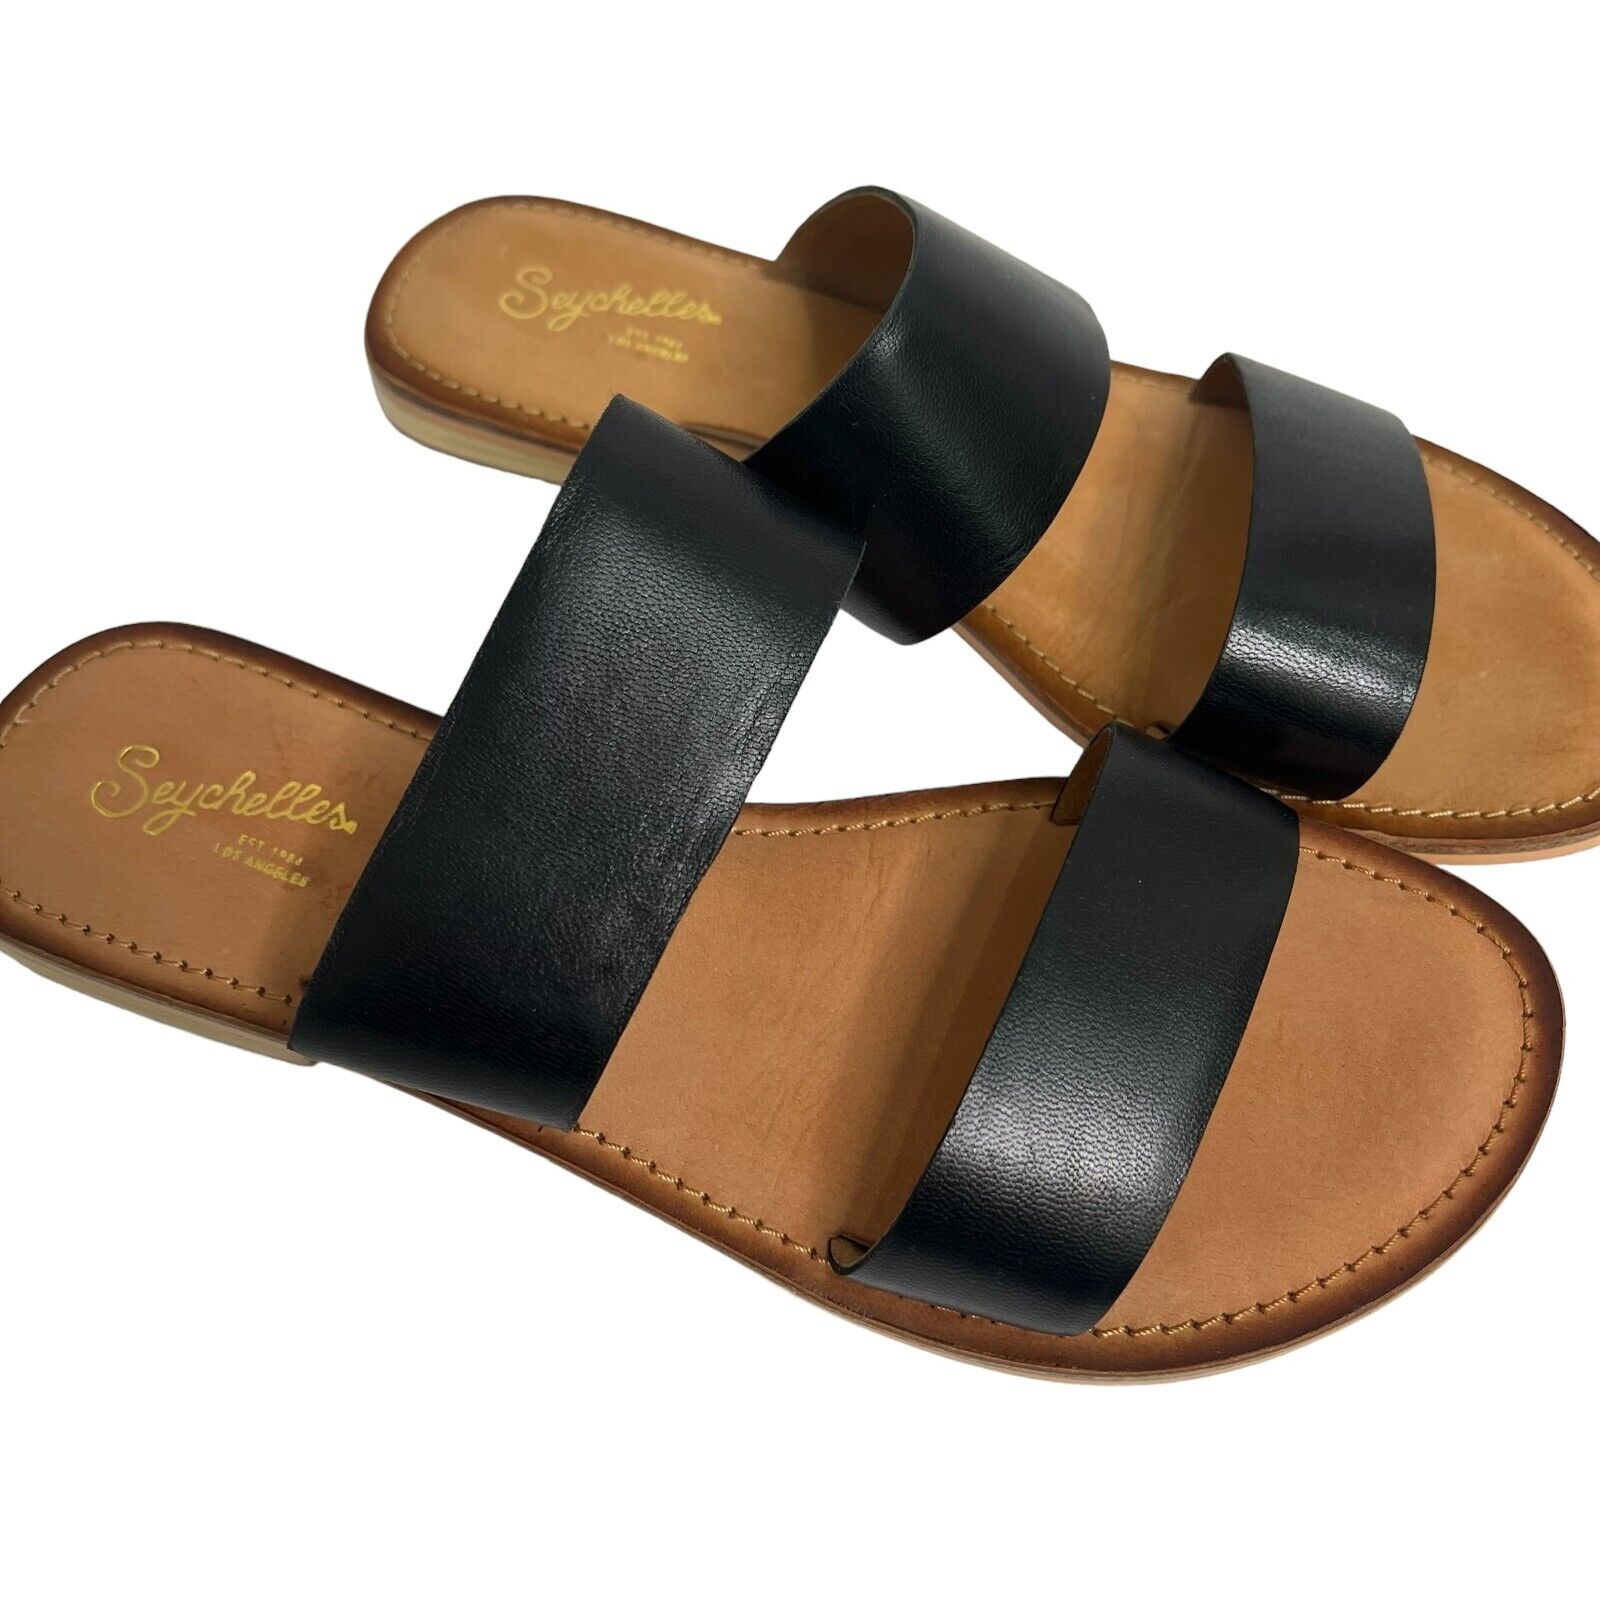 Seychelles Black Strap Leather Two Strap Slides Sandals Size 8.5